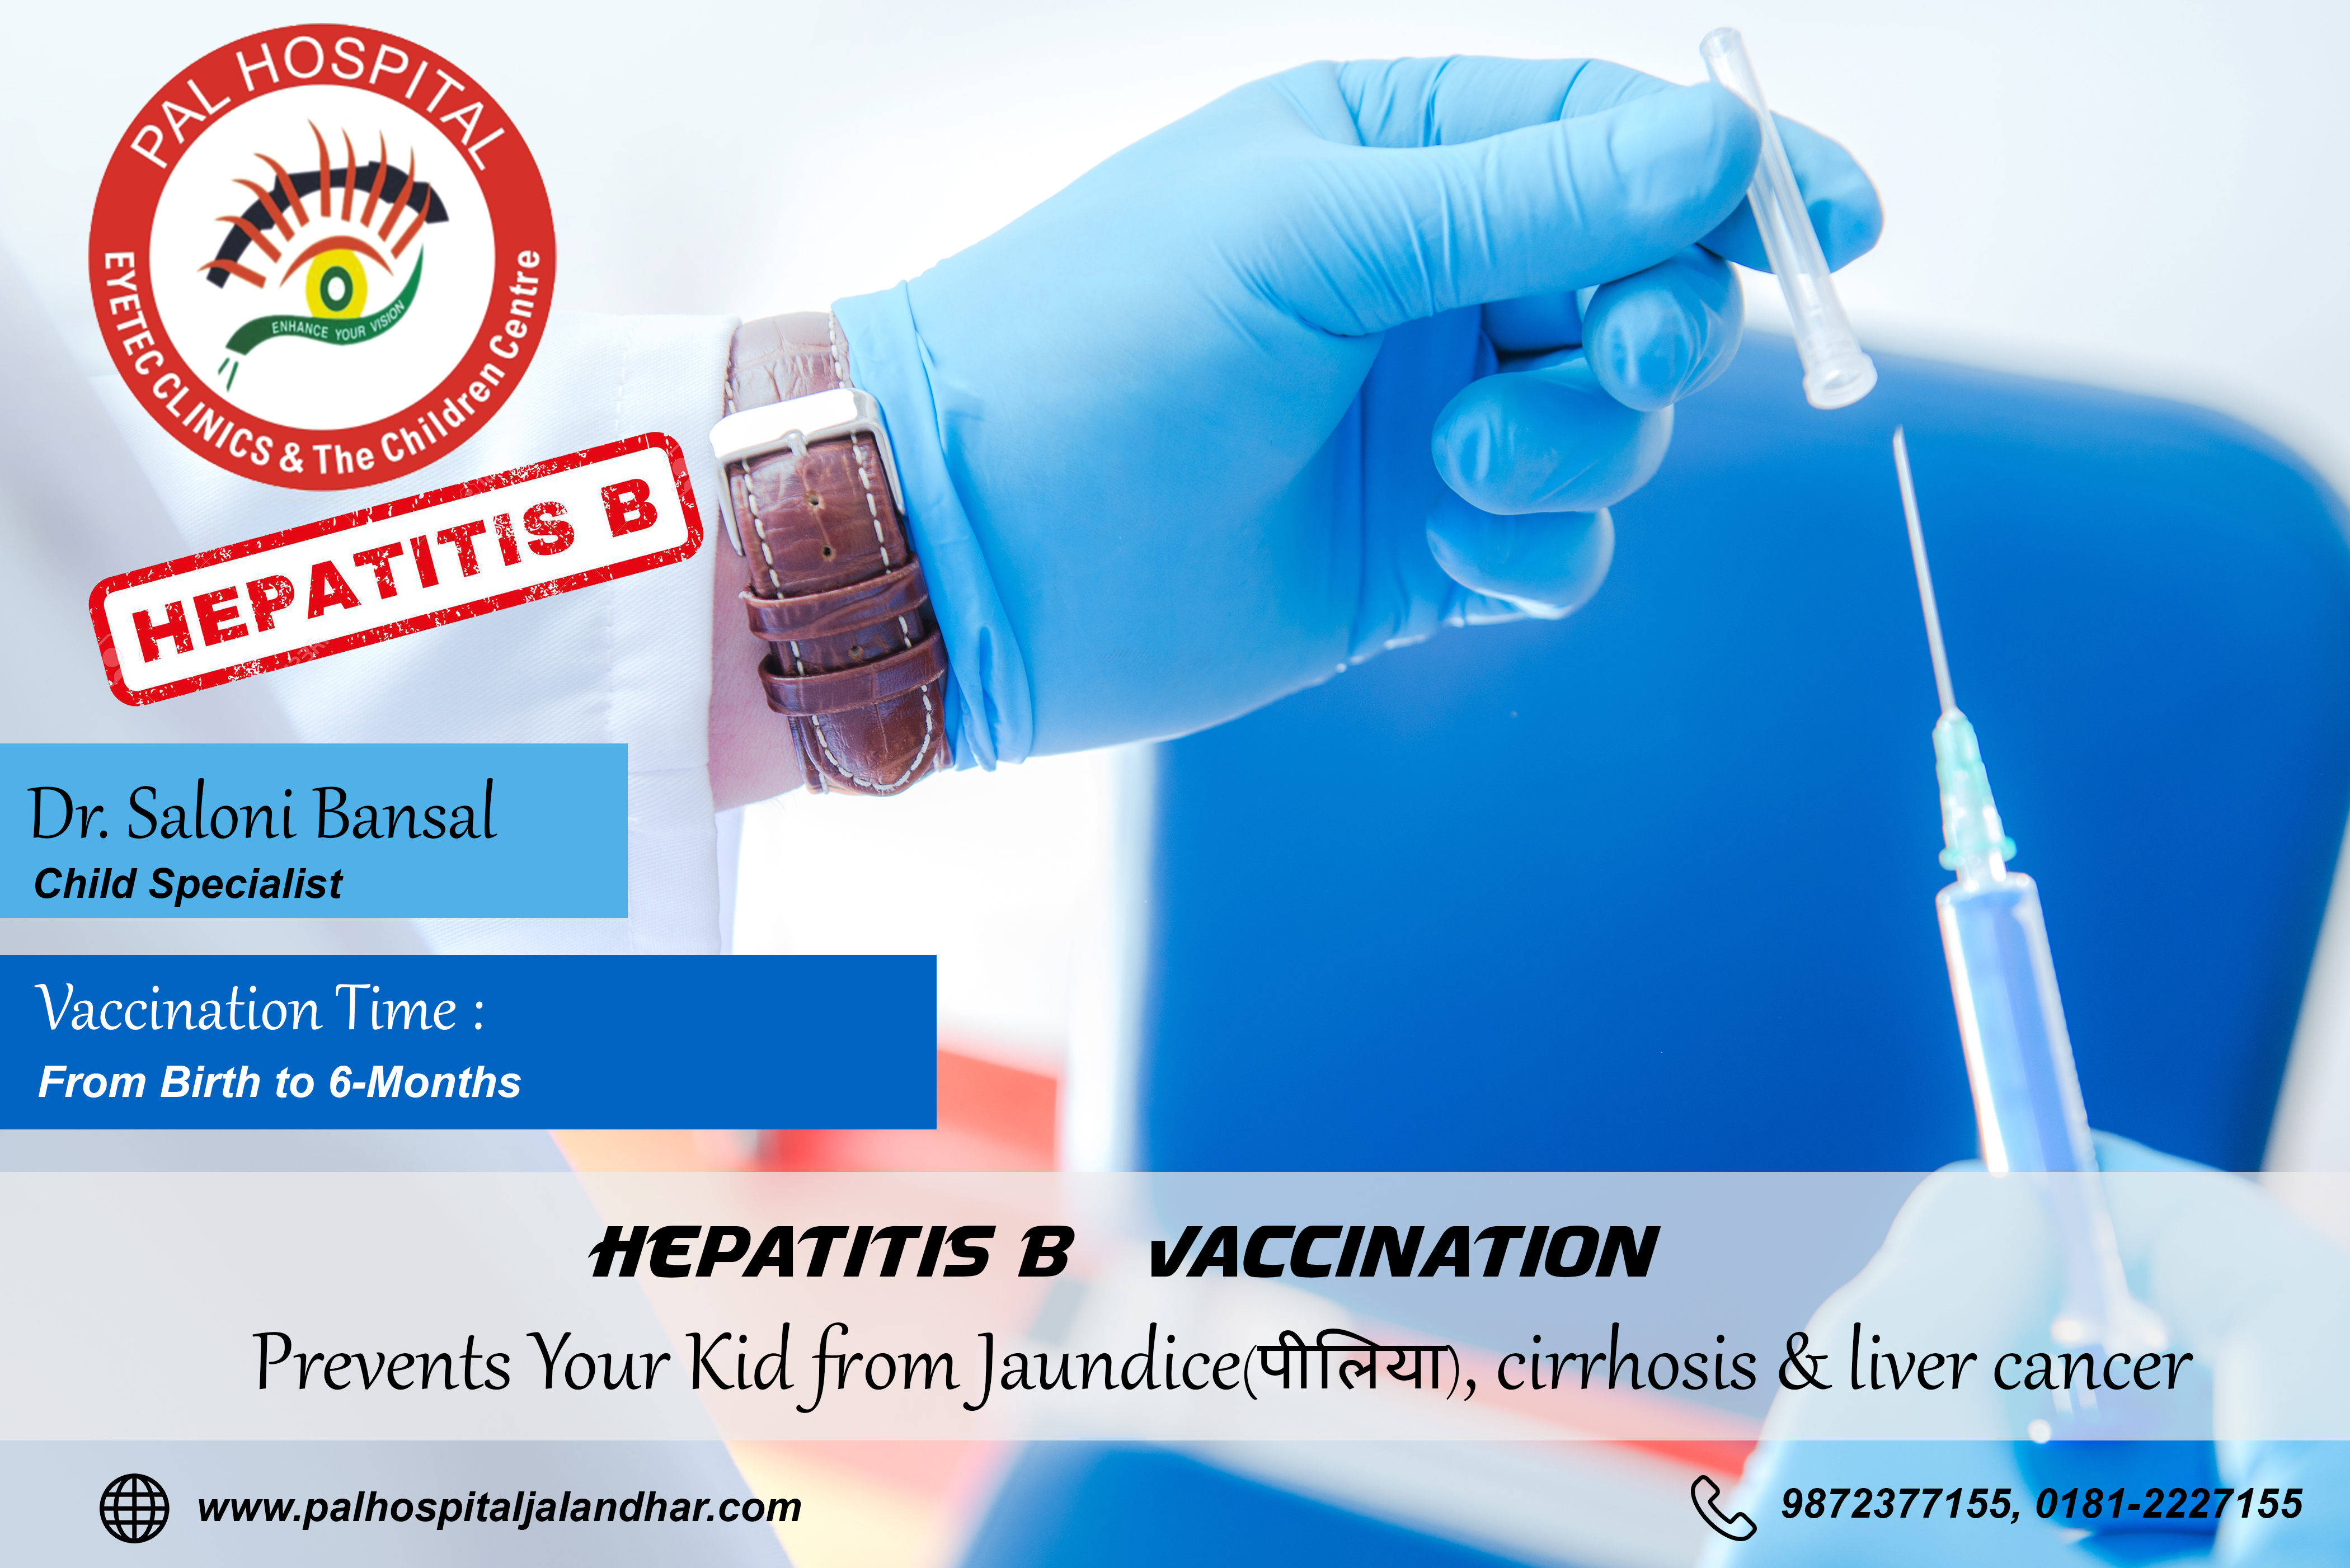 Hepatitis B Vaccination in Jalandhar at Pal Hospital Eyetec Clinics & The Children Centre